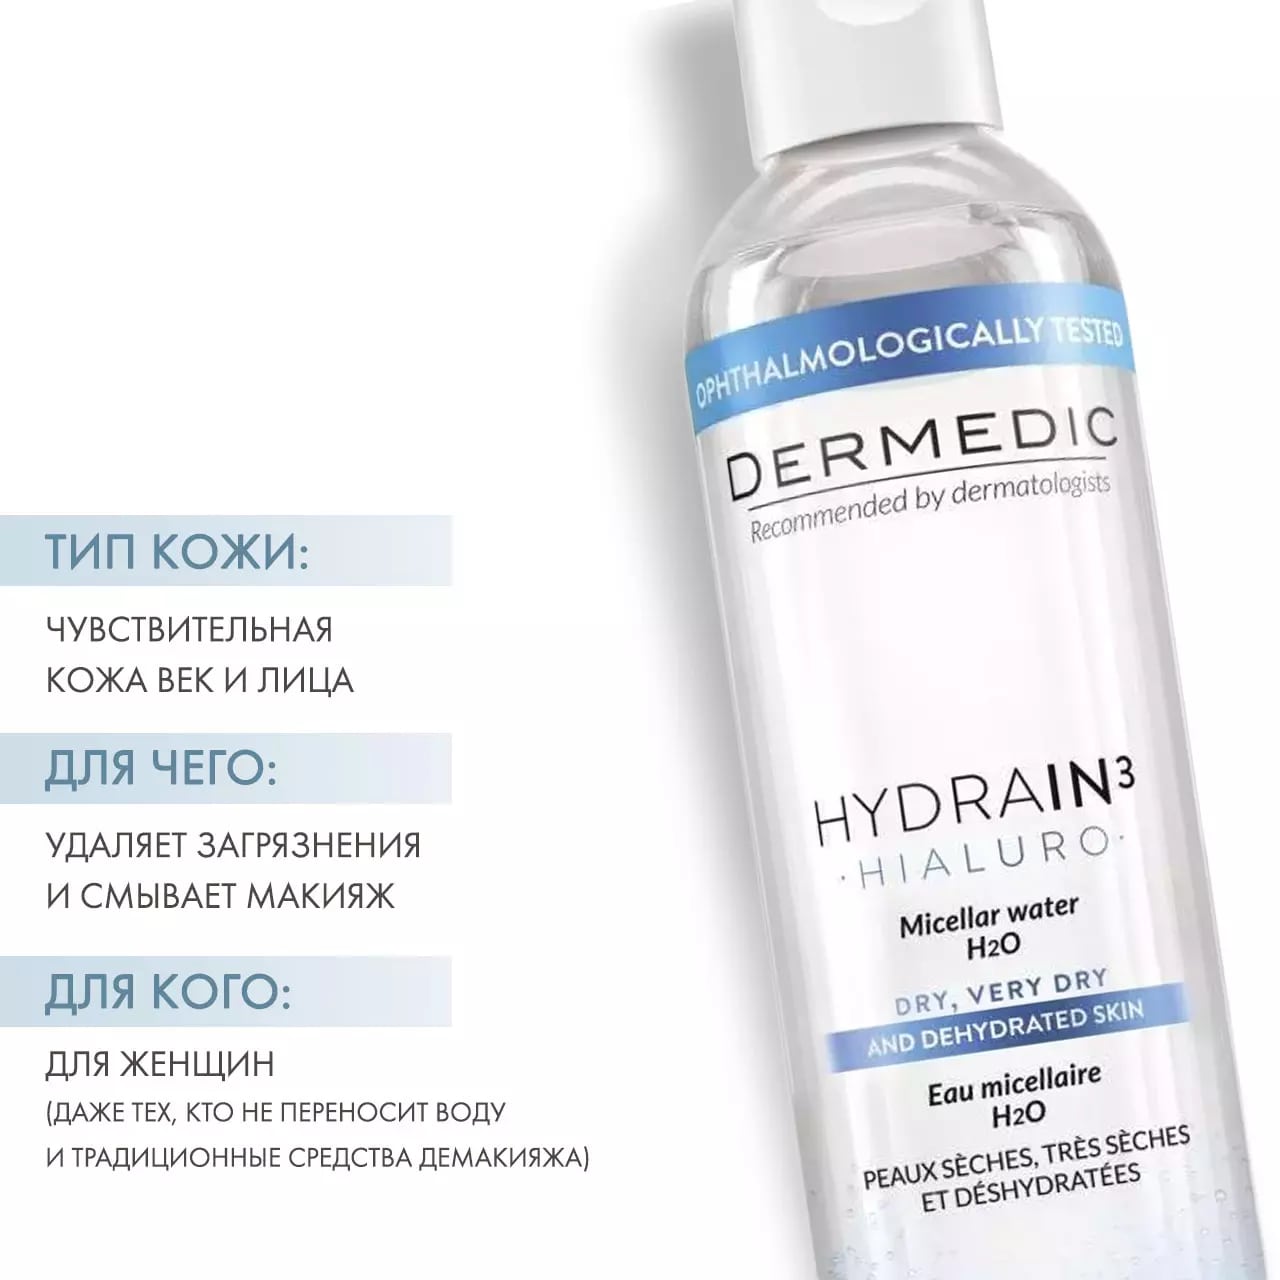 Вода h2o отзывы. Dermedic Гидрейн 3. Dermedic Hialuro Micellar Water h2o Duo. Мицеллярная вода h2o. Dermedic HIDRAIN мицеллярная вода.